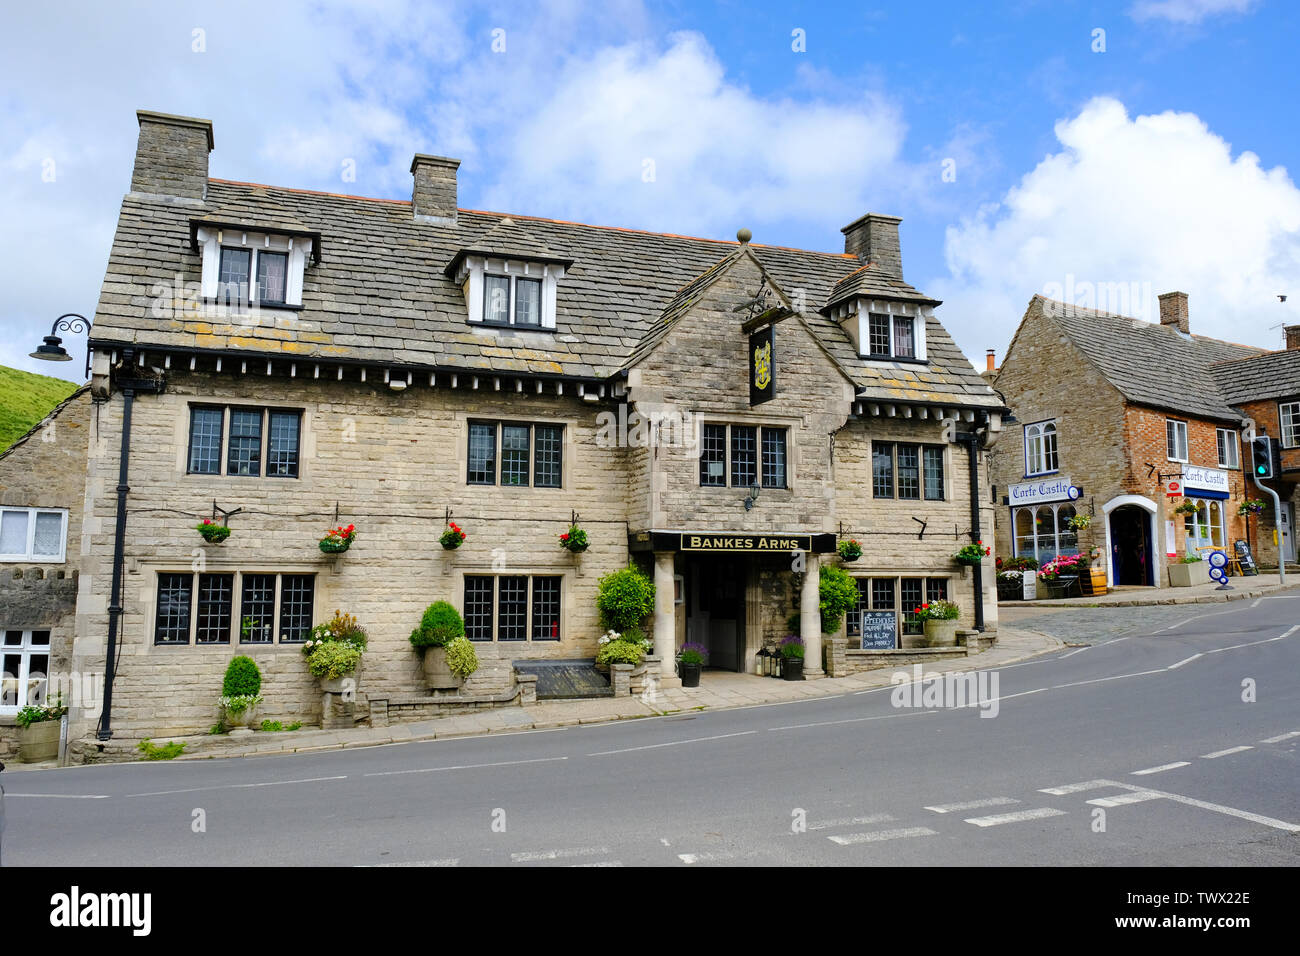 The Bankes Arms, a traditional pub in Corfe Castle, Dorset, UK - John Gollop Stock Photo